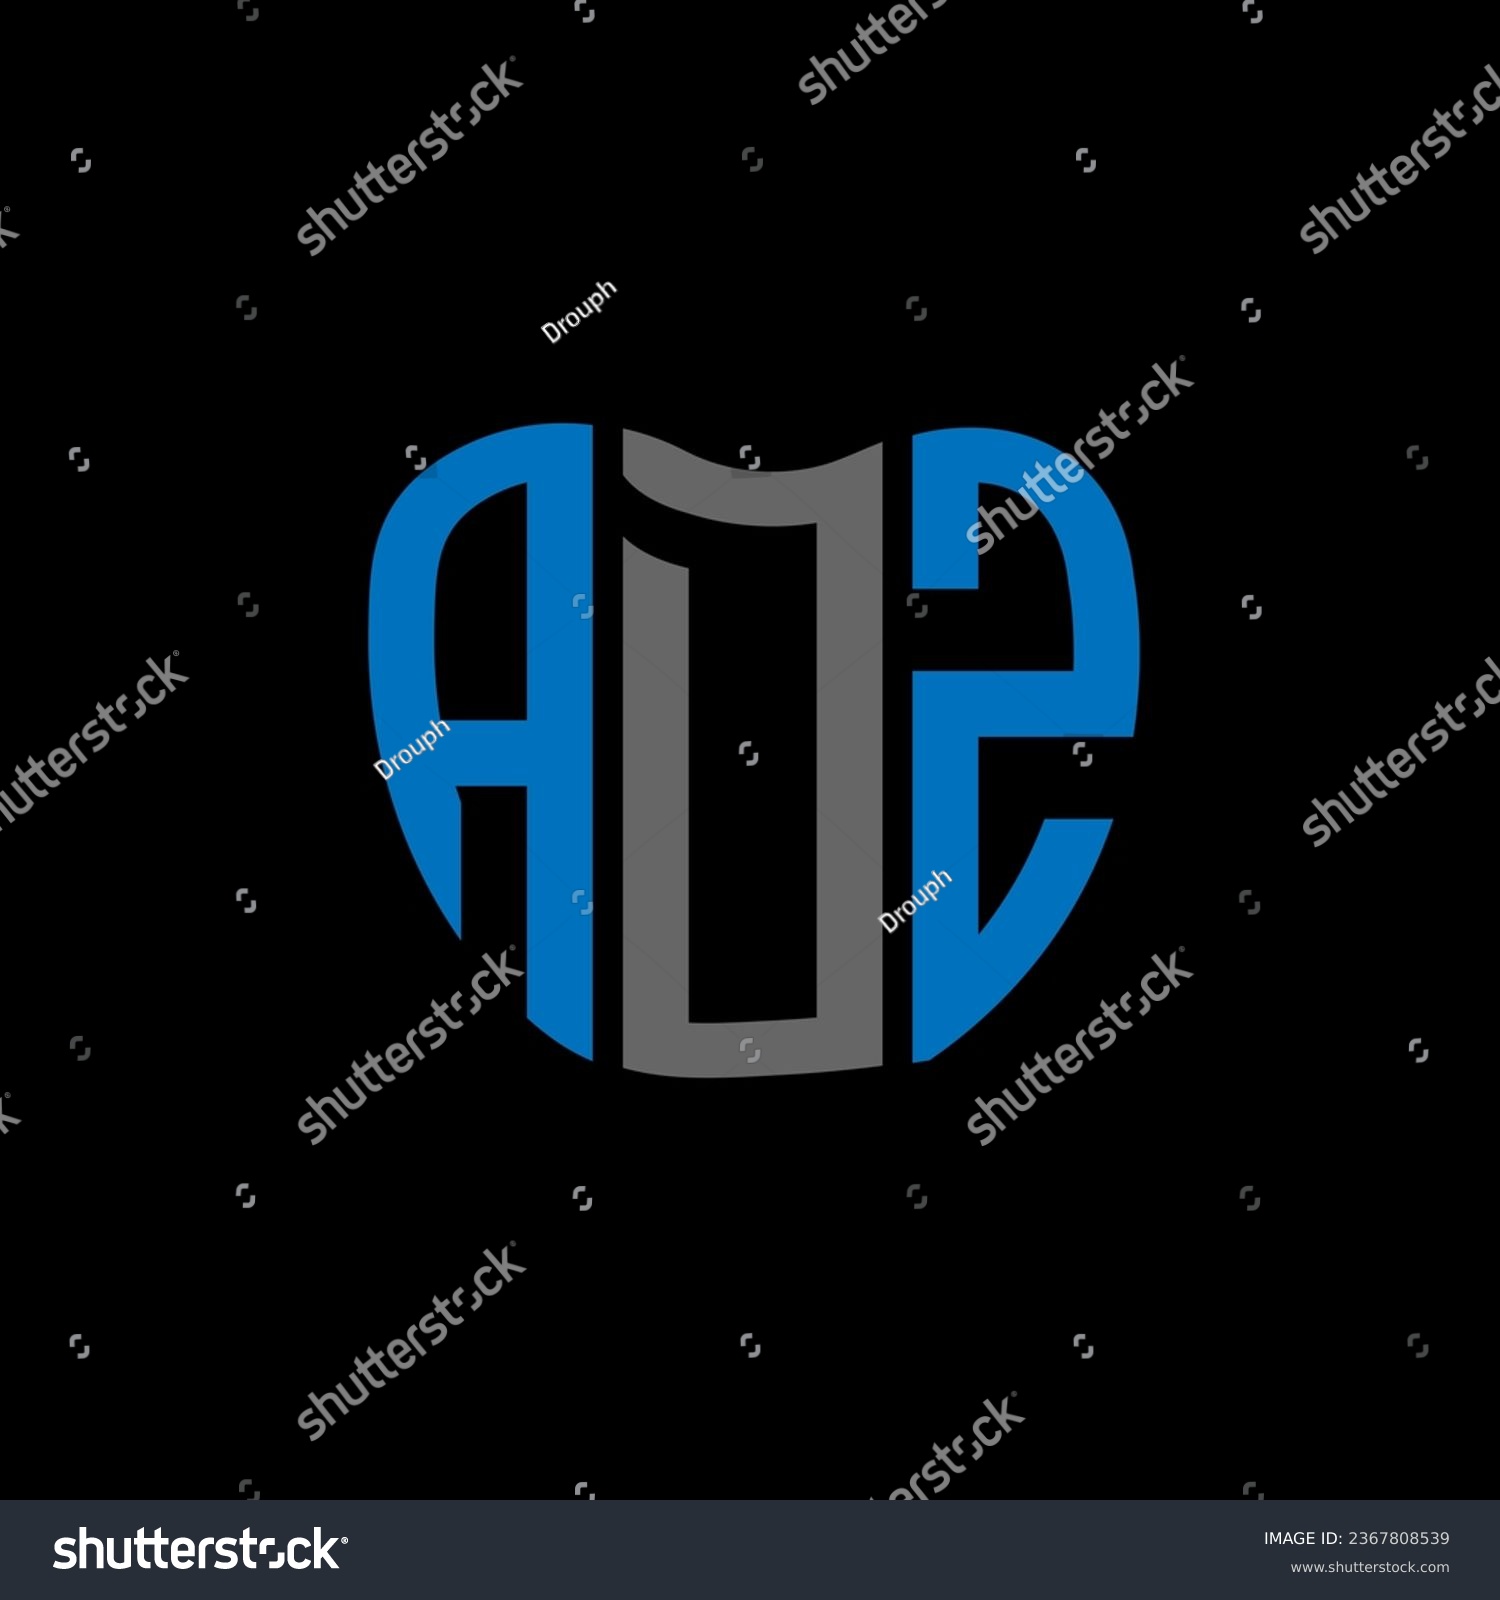 SVG of ADZ letter logo creative design. ADZ unique design.
 svg